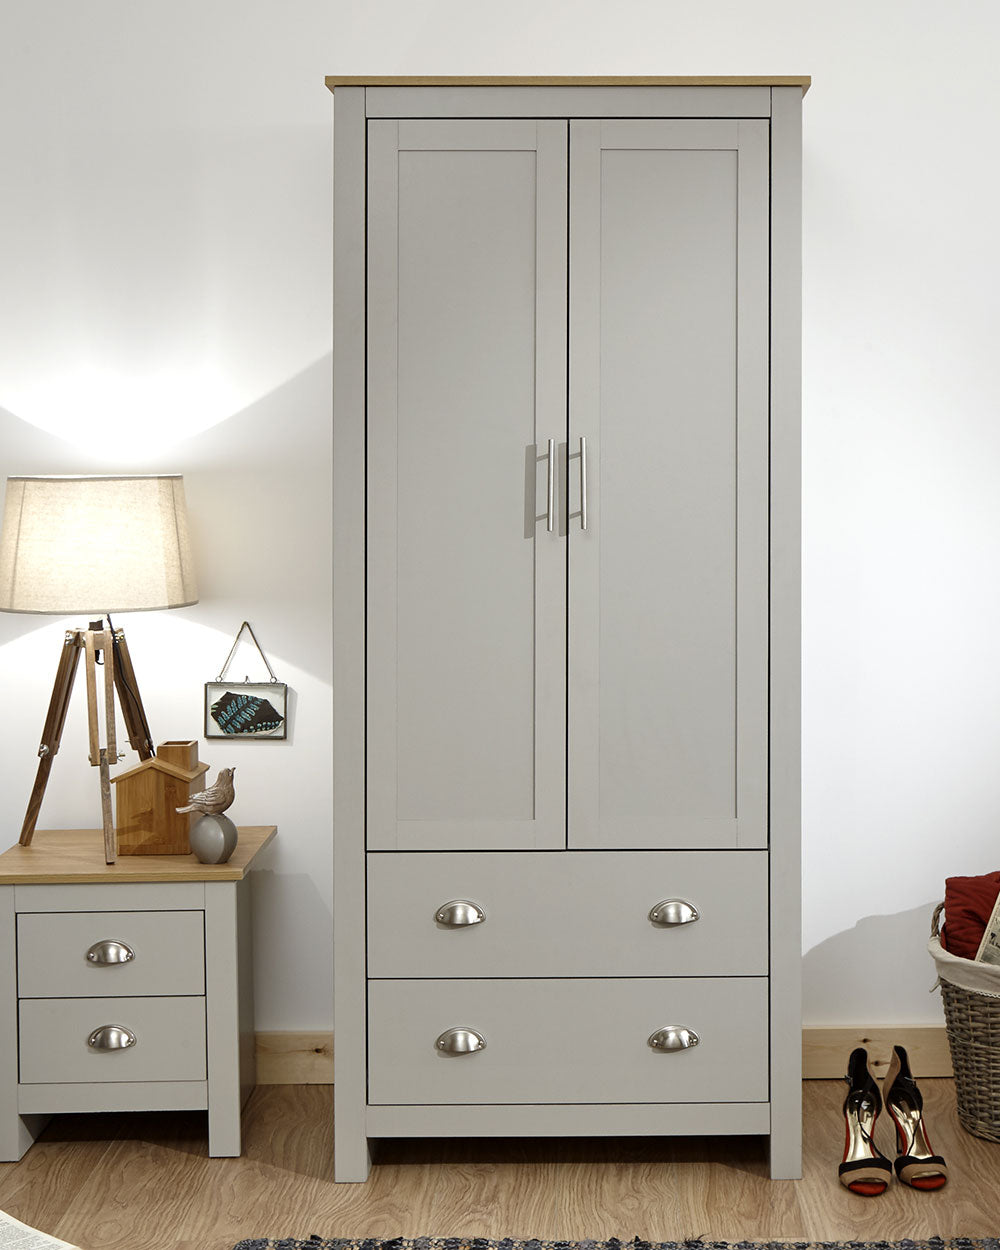 Lancaster 2 Door 2 Drawer wardrobe in sleek grey with an oak effect top in a bedroom setting